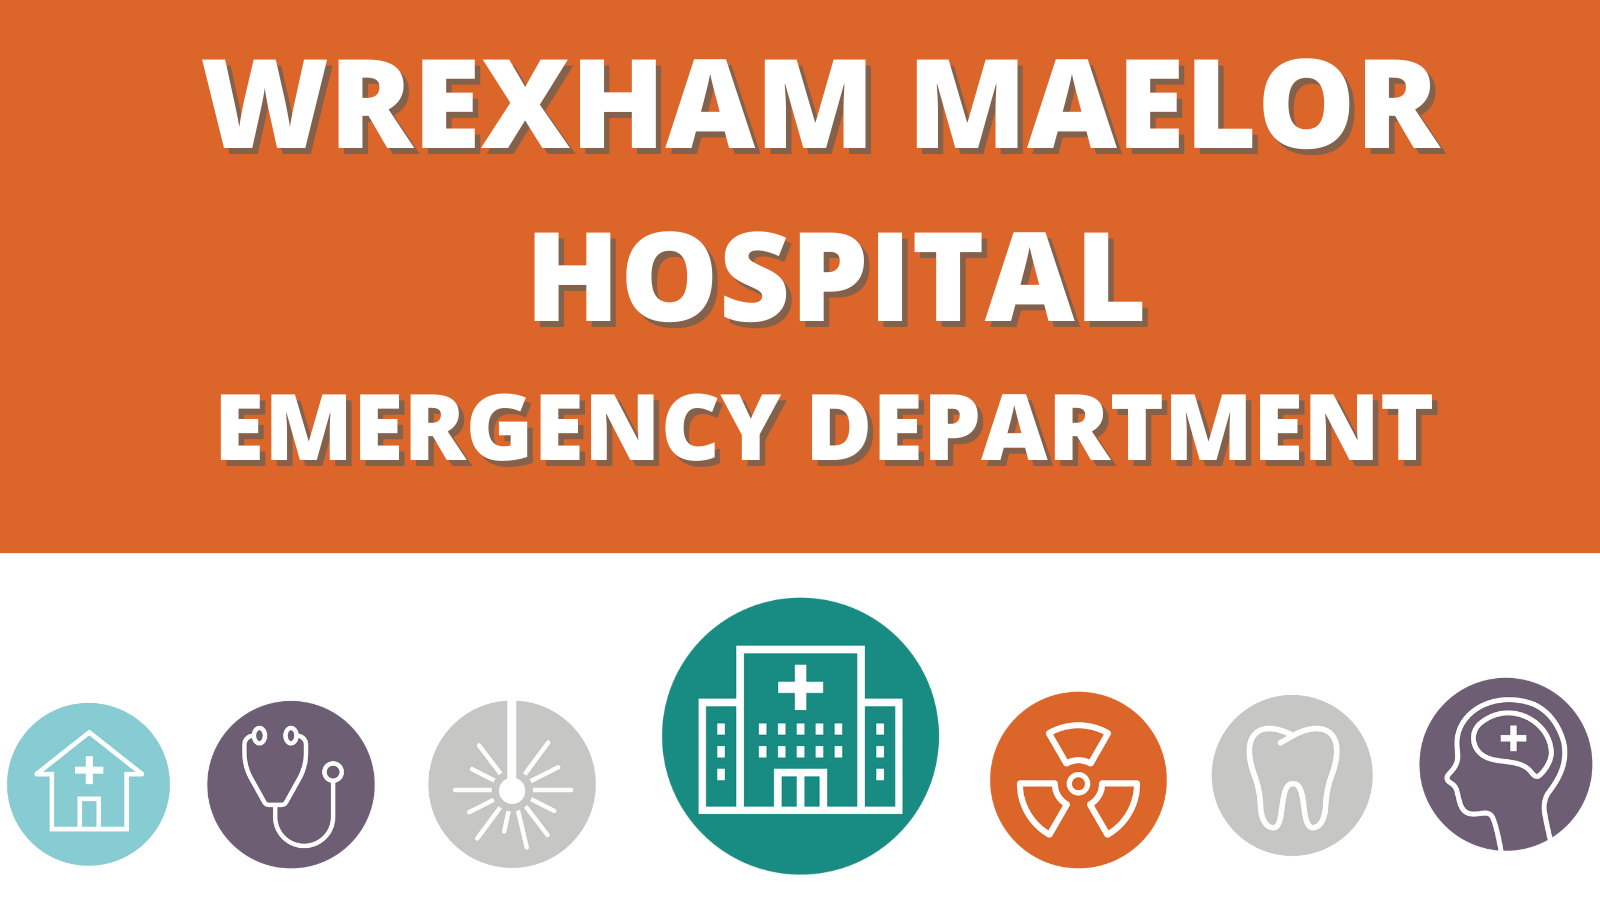 Wrexham Maelor Hospital - Emergency Department